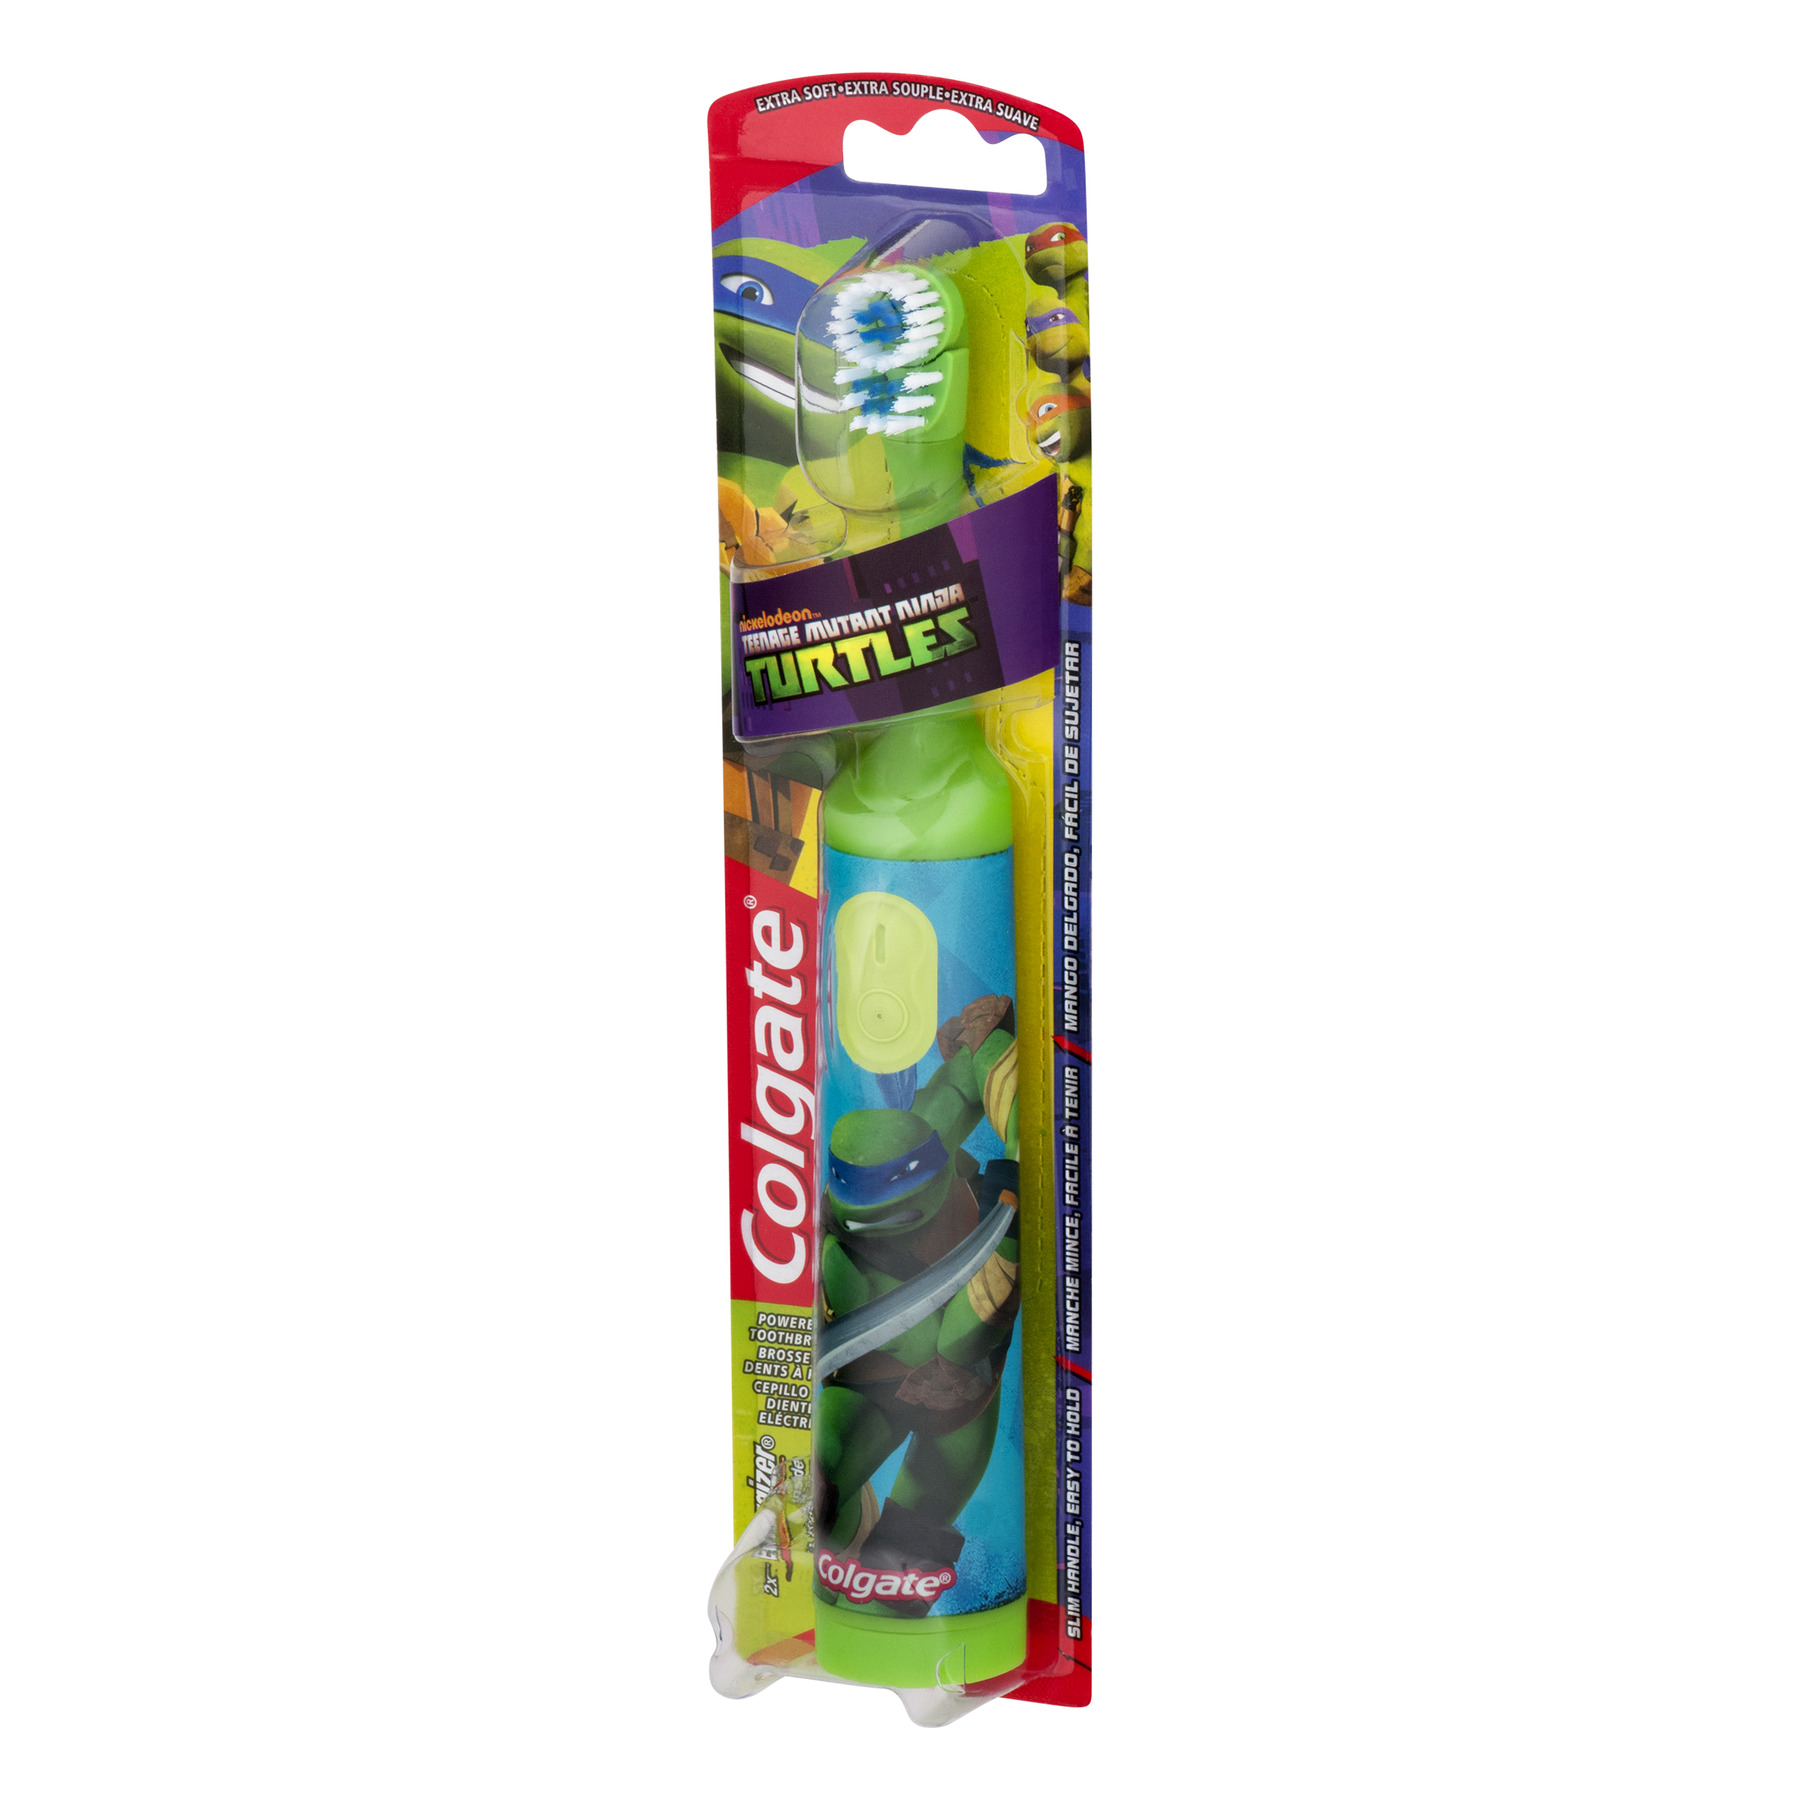 Colgate Kids Teenage Mutant Ninja Turtles Battery Electric Toothbrush - image 4 of 6